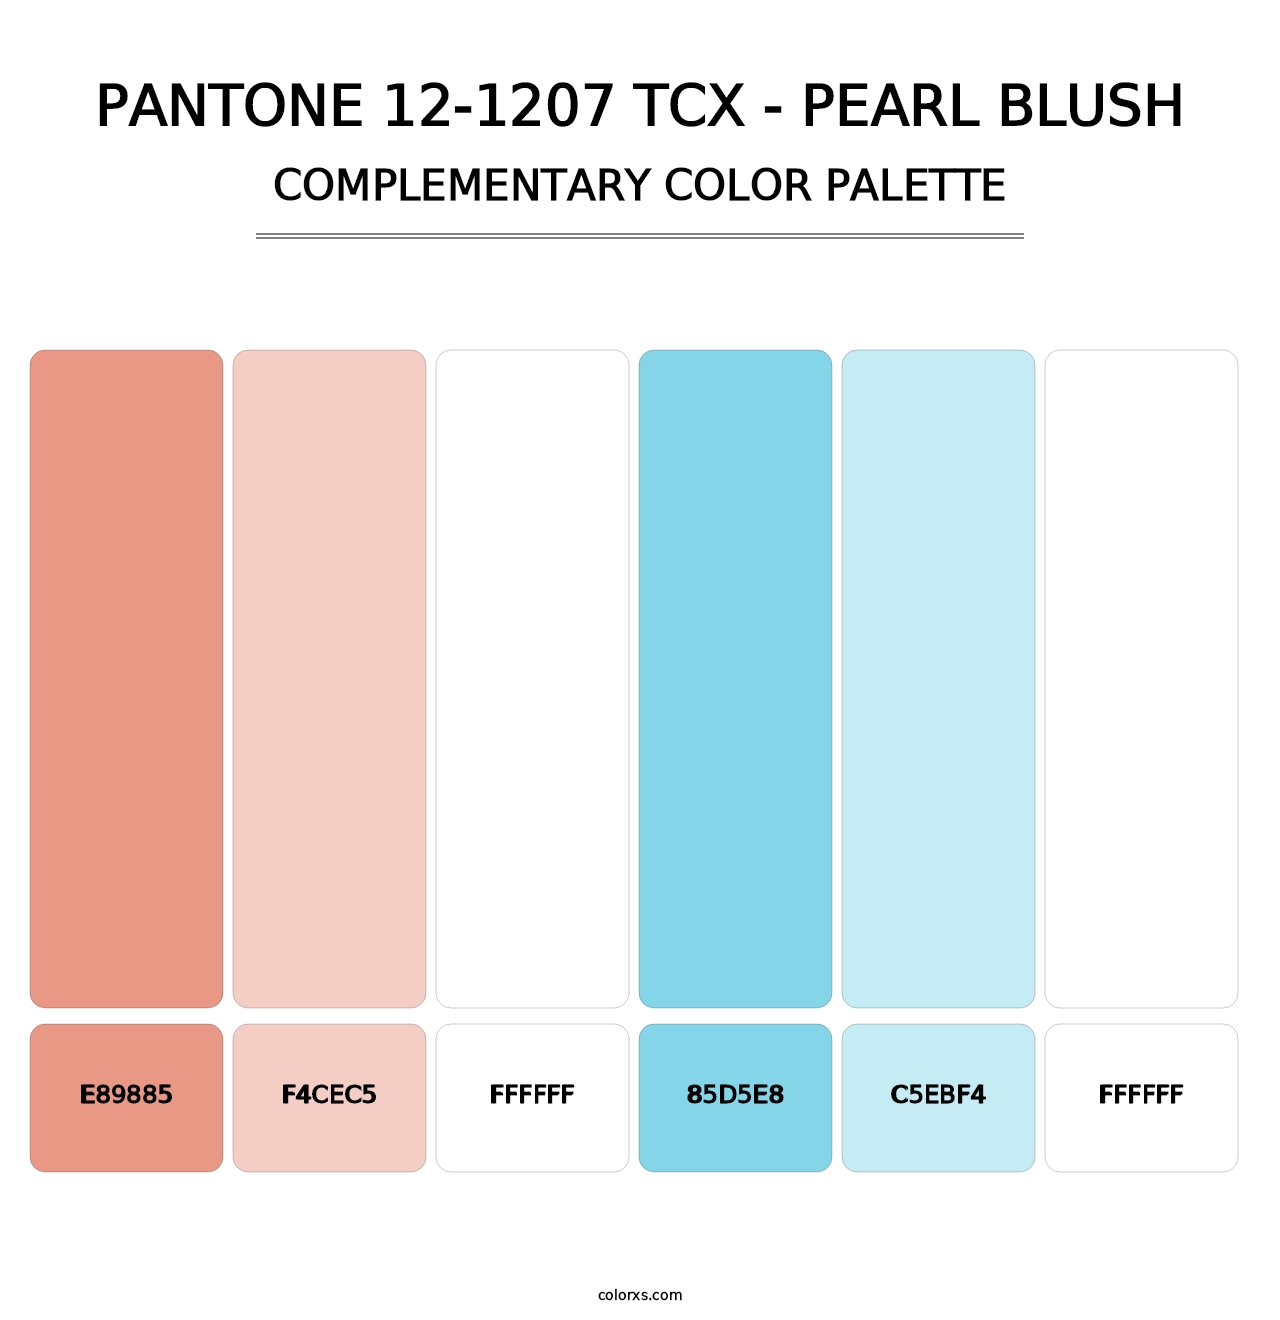 PANTONE 12-1207 TCX - Pearl Blush - Complementary Color Palette